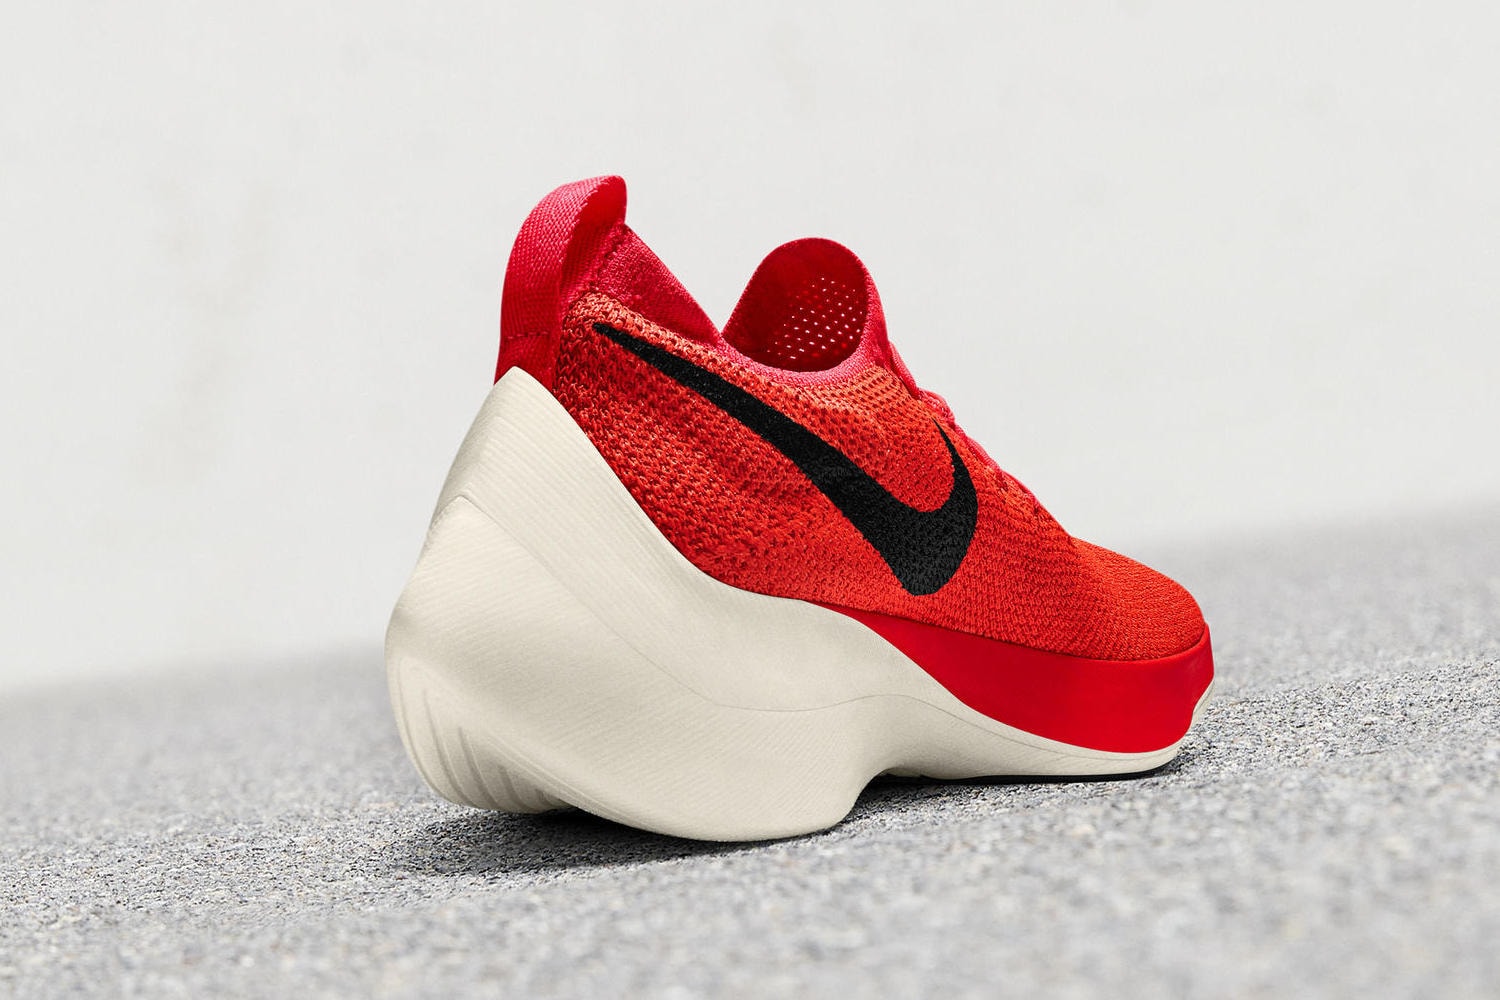 Nike 為 Eliud Kipchoge 打造全新 Zoom Vaporfly Elite 跑鞋並將限量發售